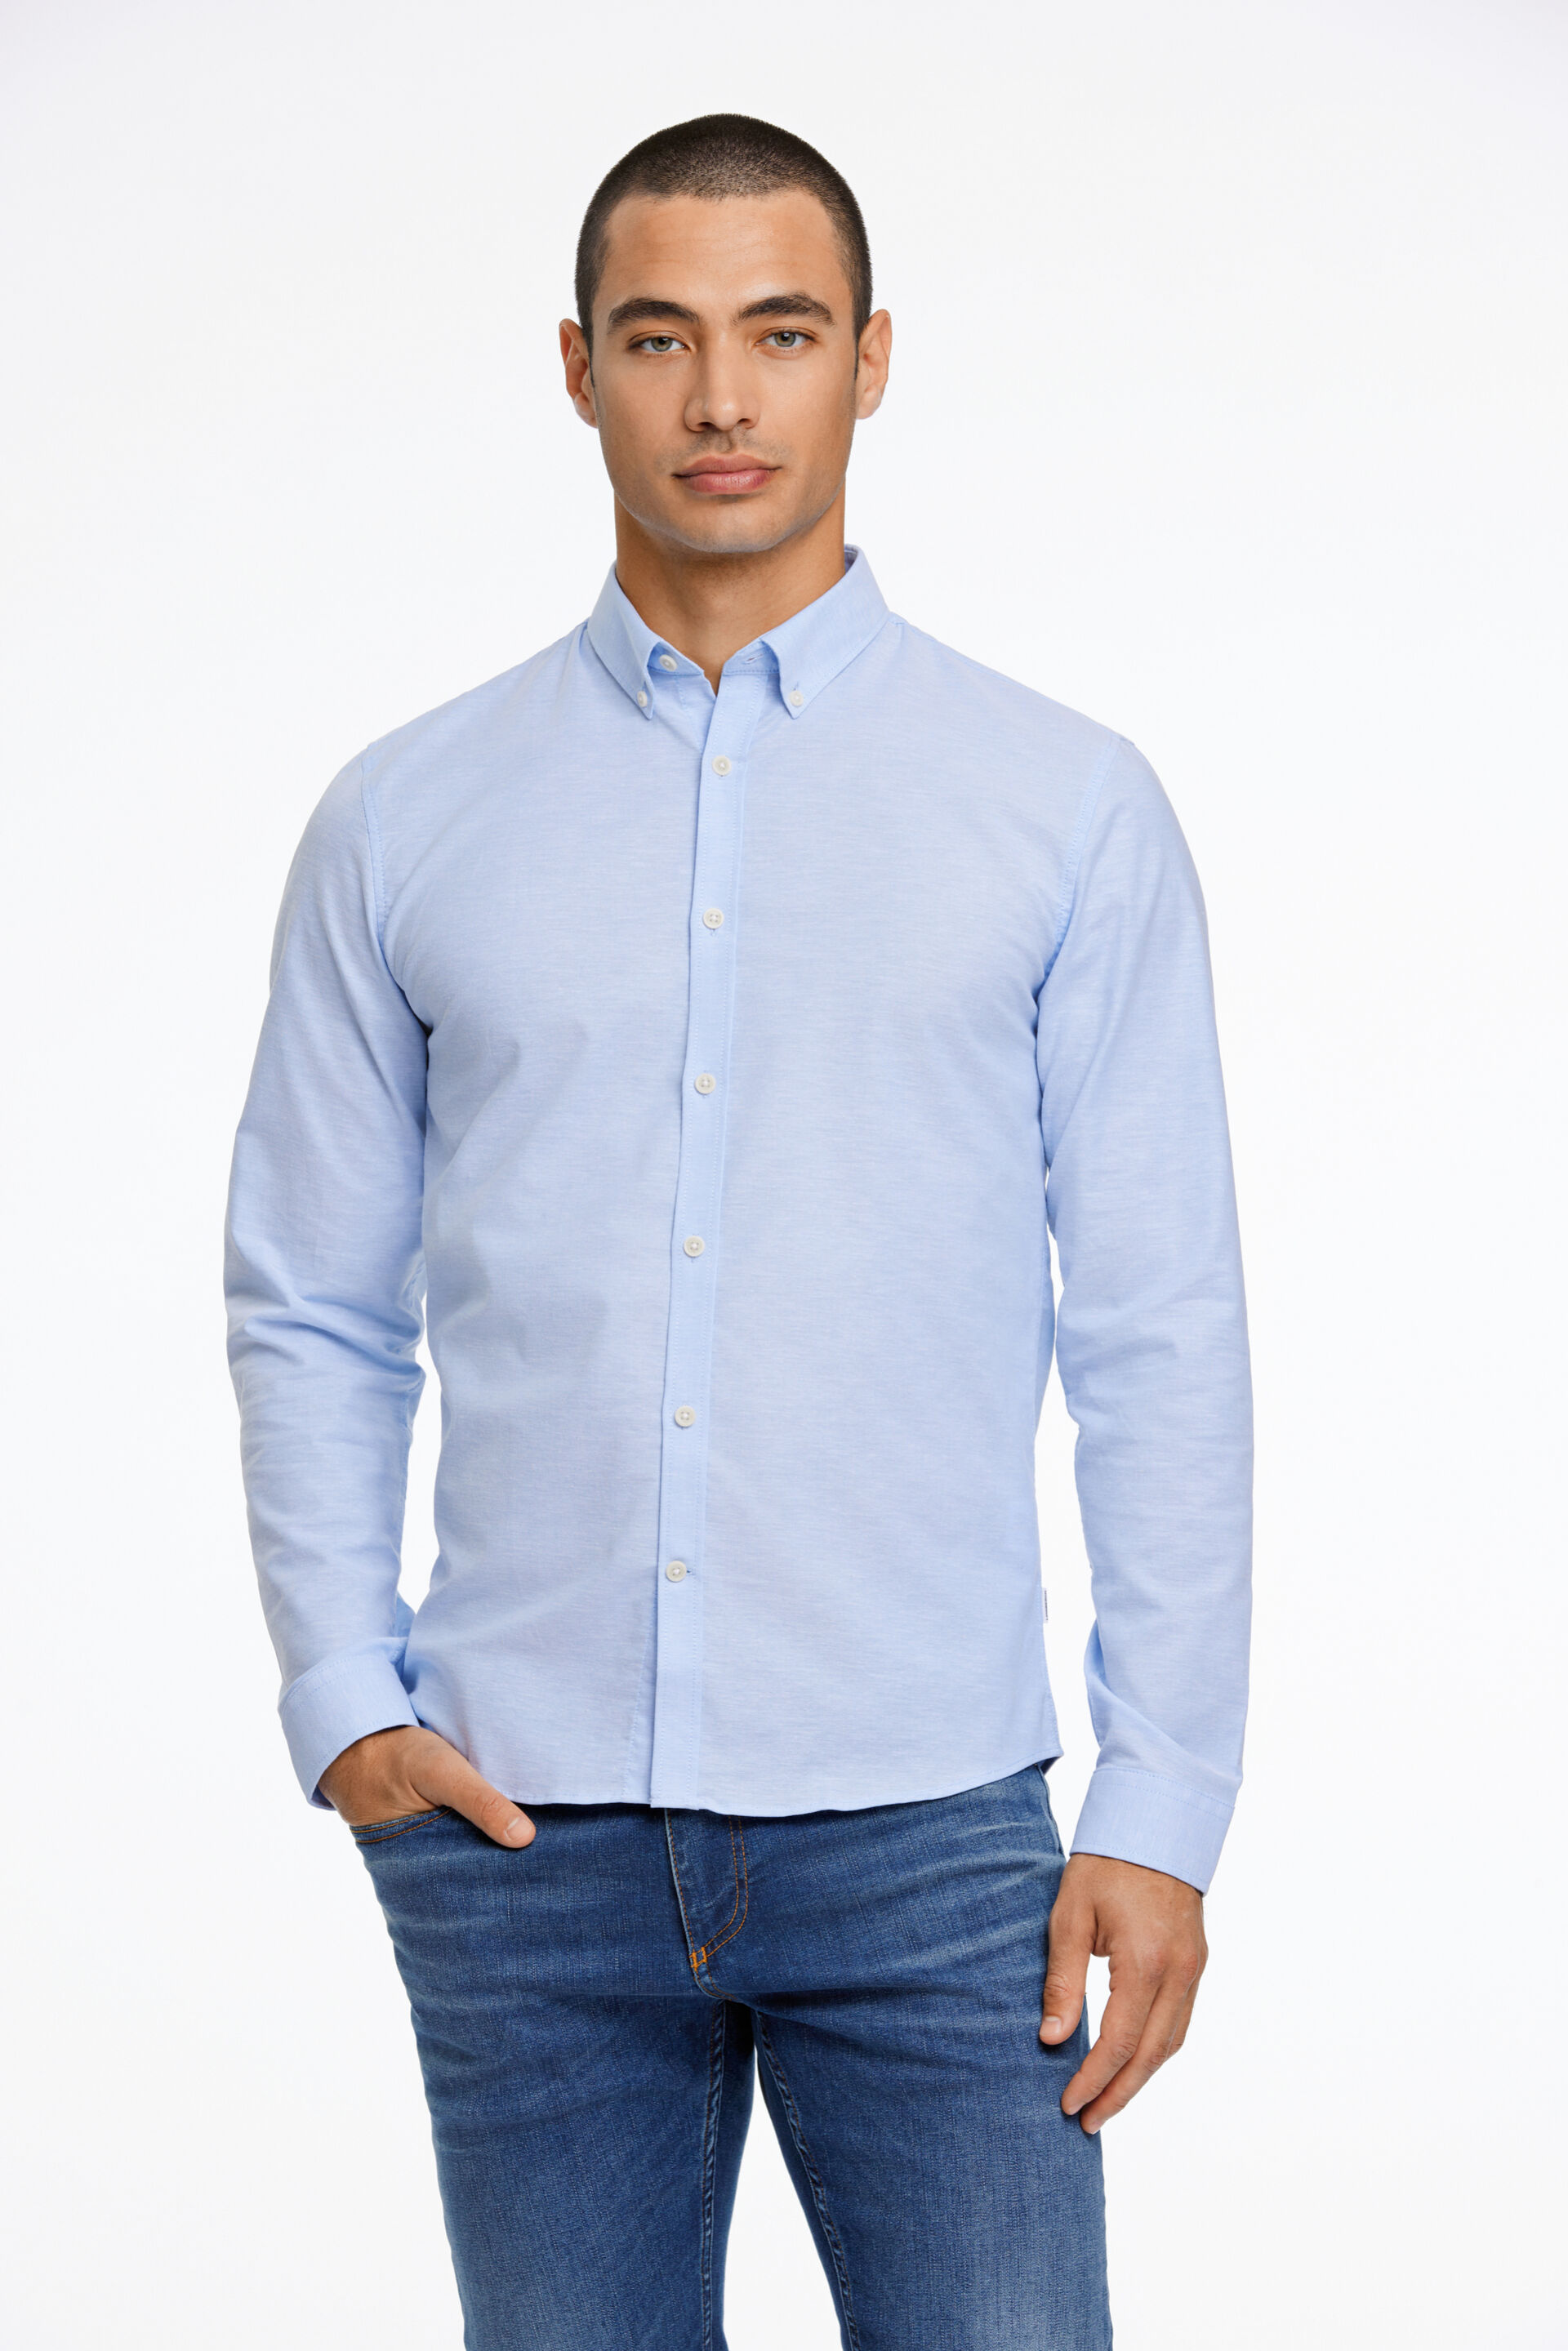 Oxfordskjorta Oxfordskjorta Blå 30-203174